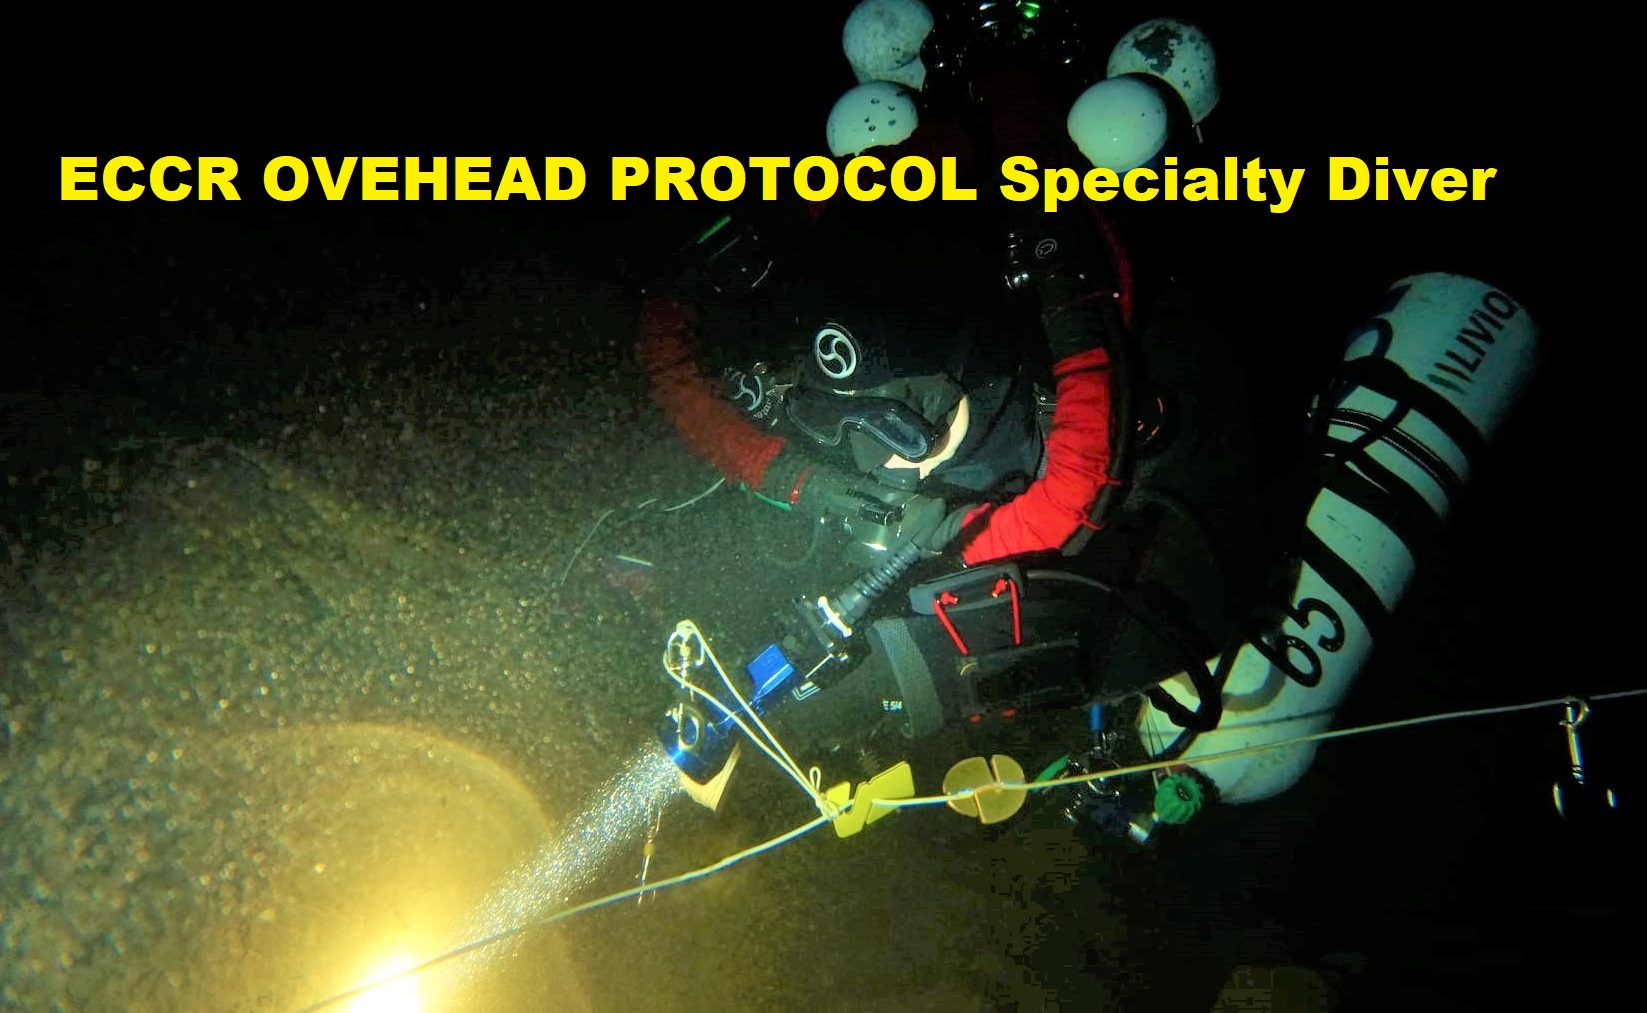 Eccr Overhead Protocol Specialty Diver